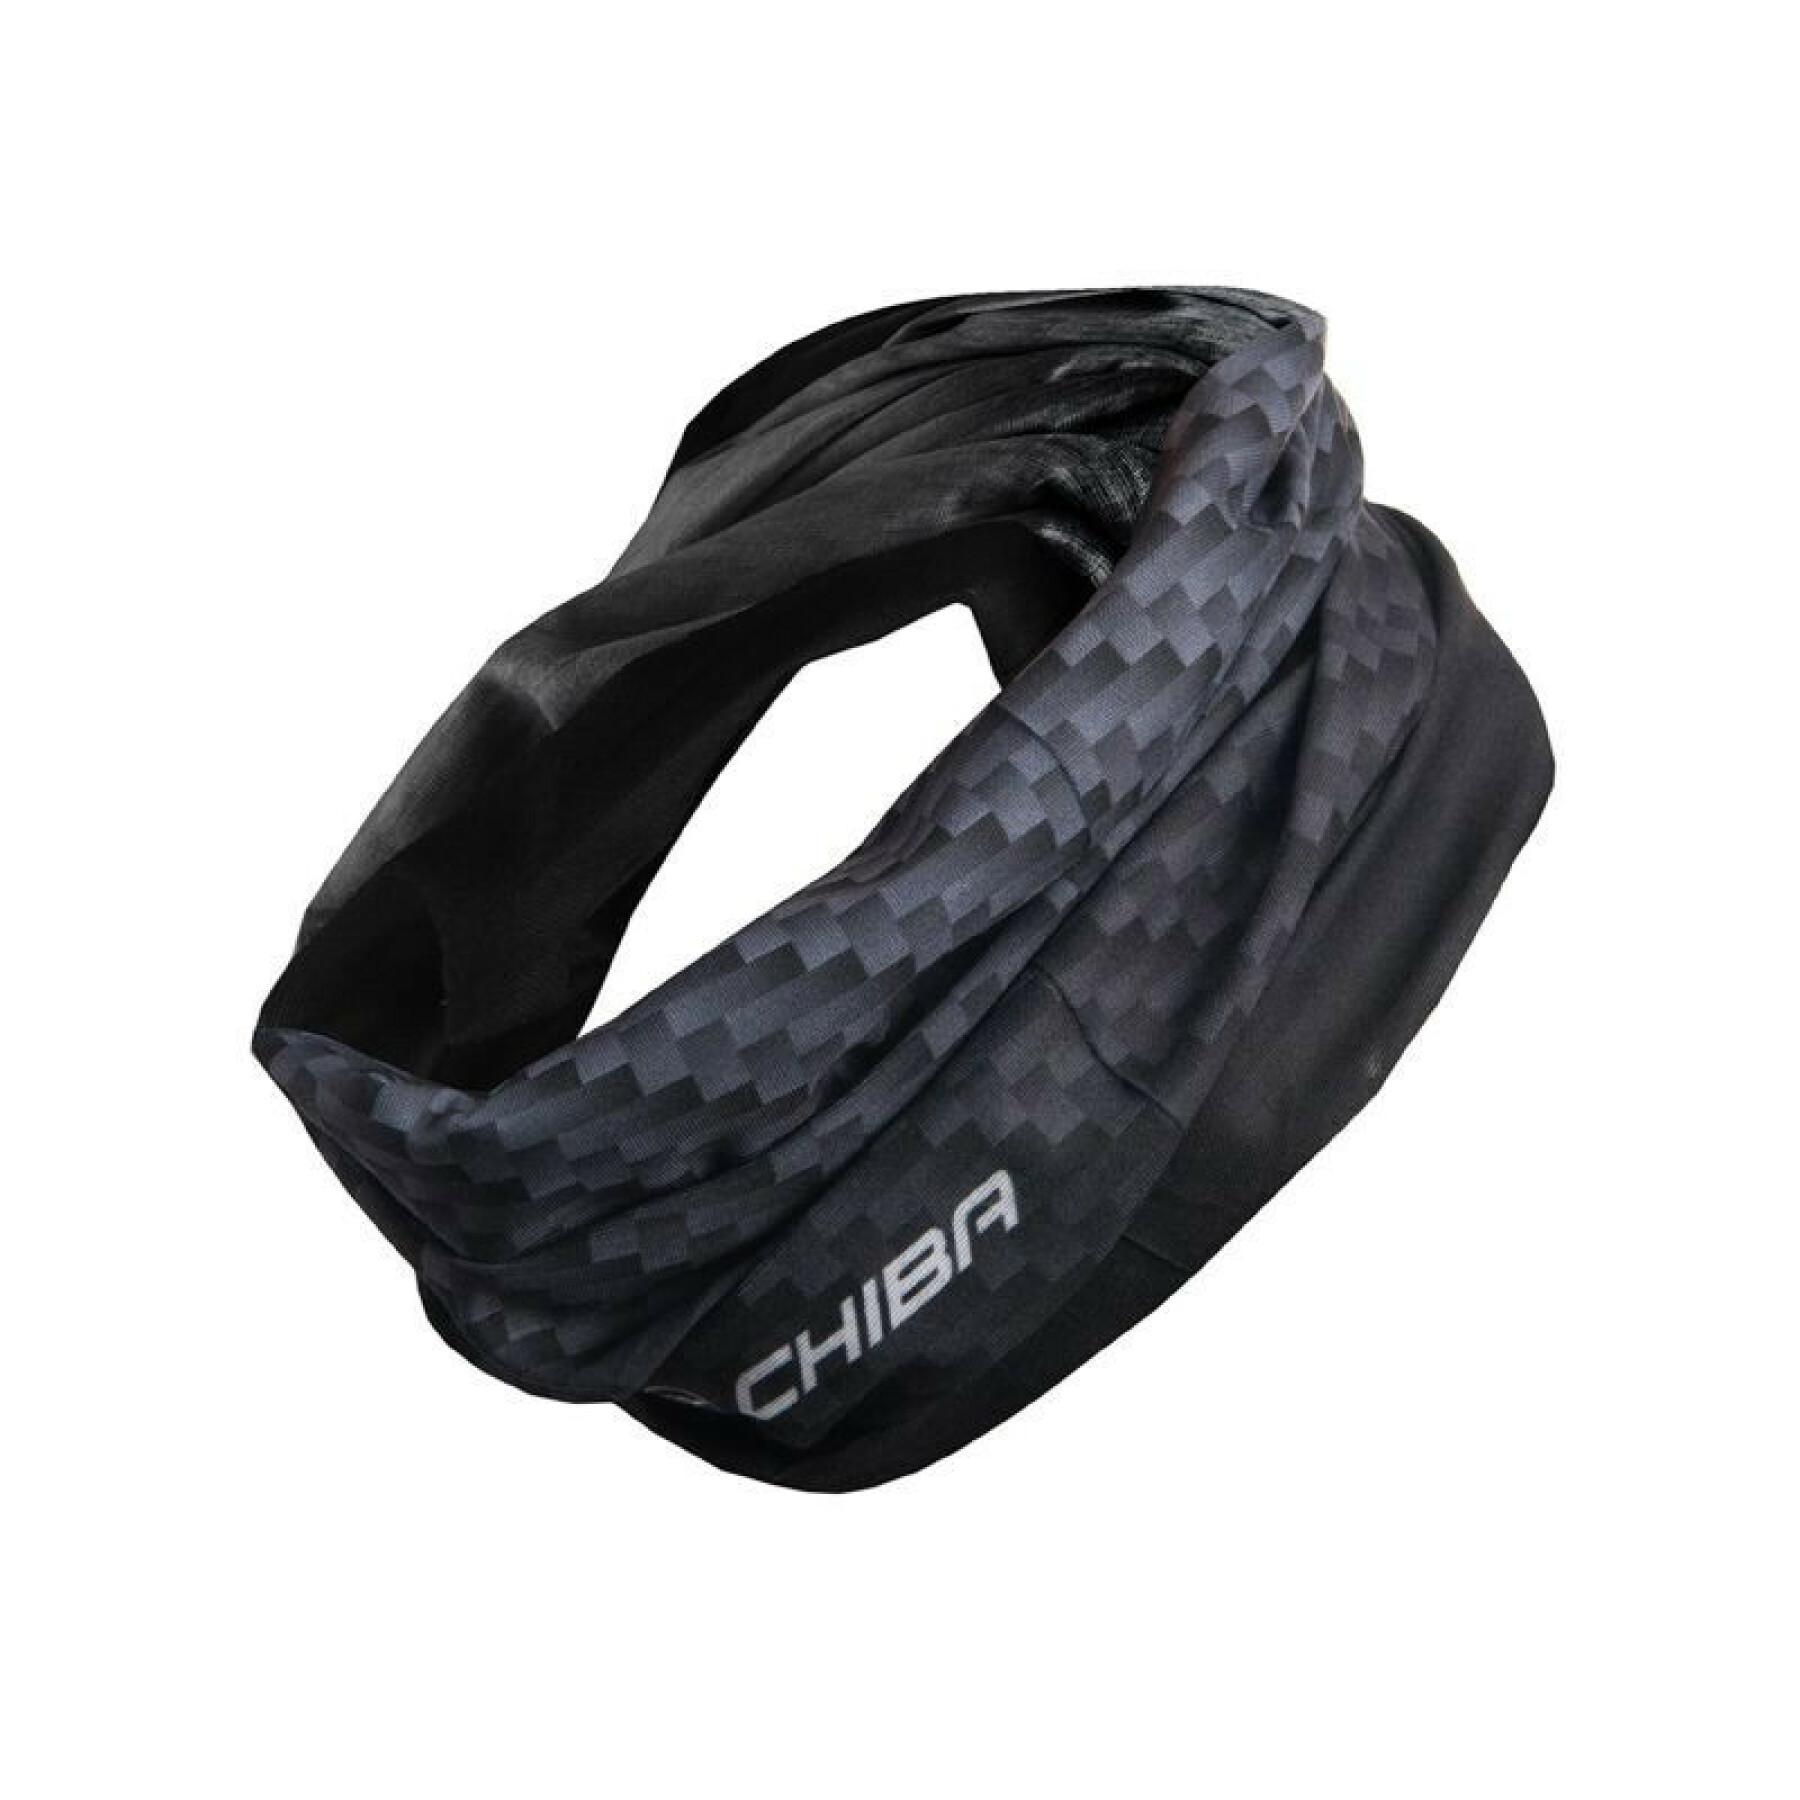 Halsband - bandana - hoofdband Chiba